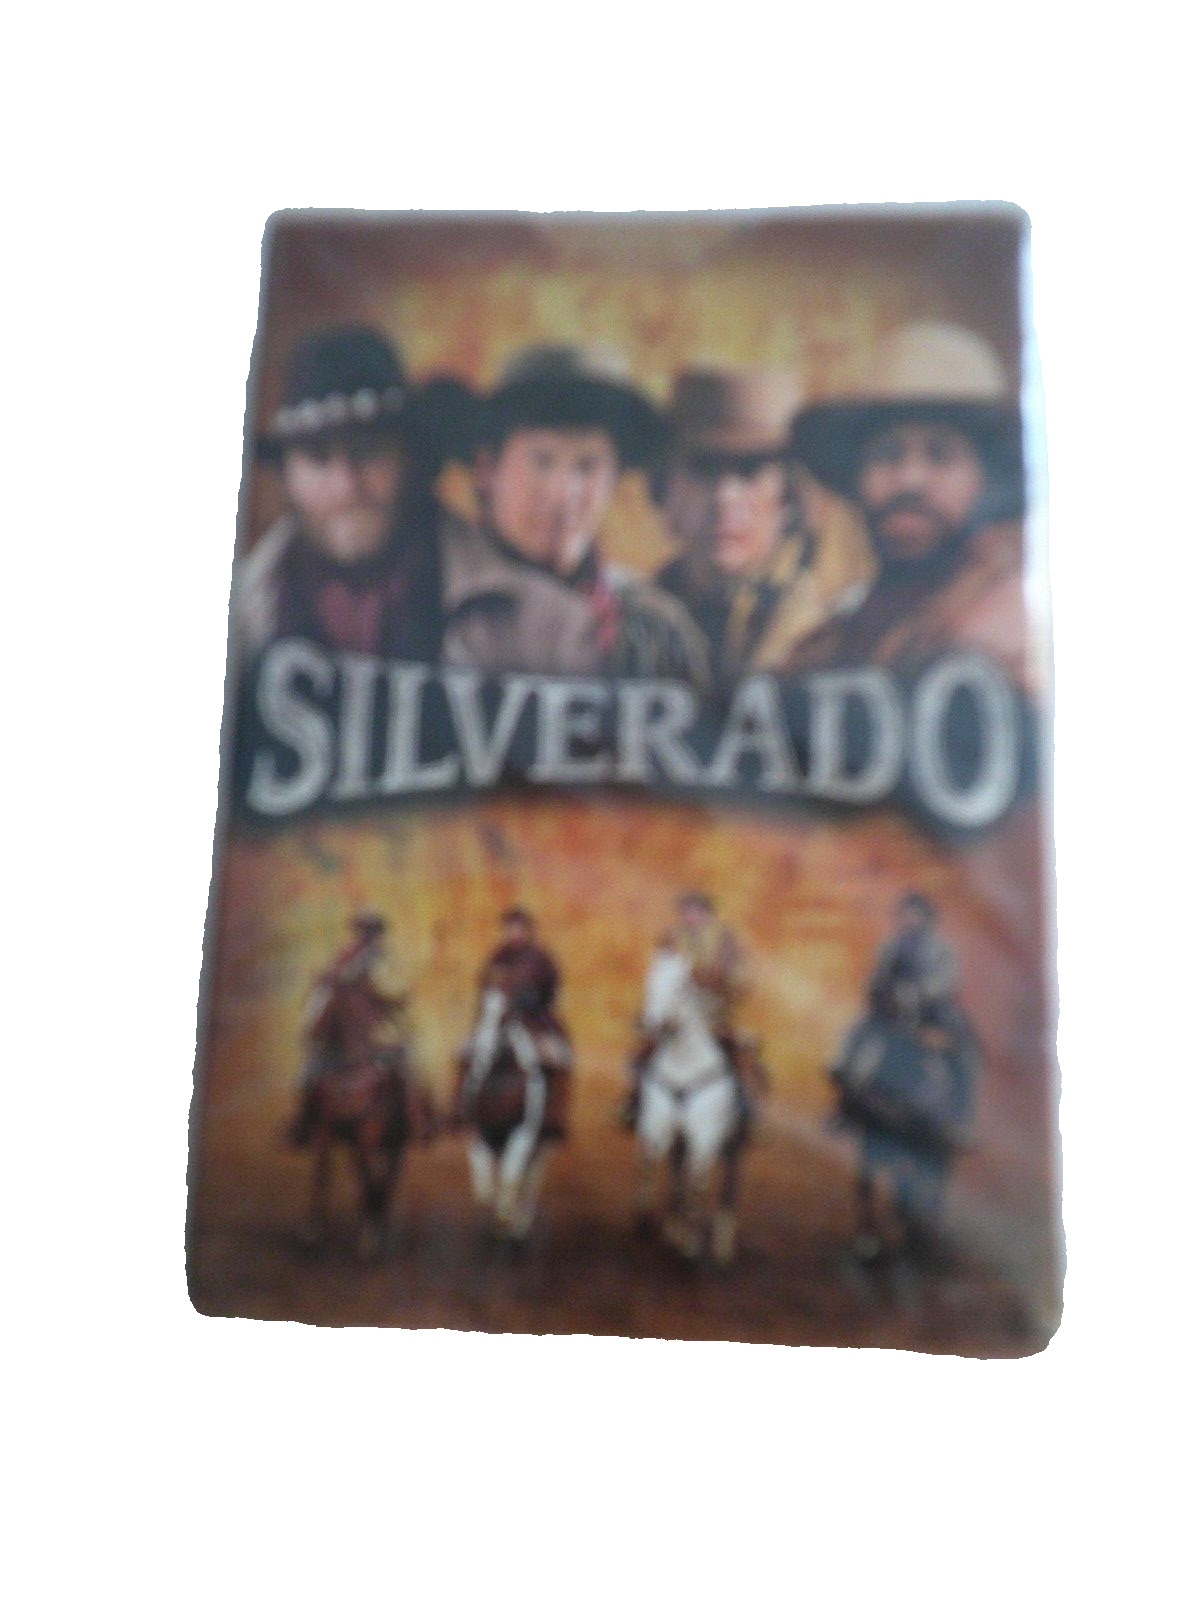 New Silverado Western Movie Playing Cards Sealed 1985